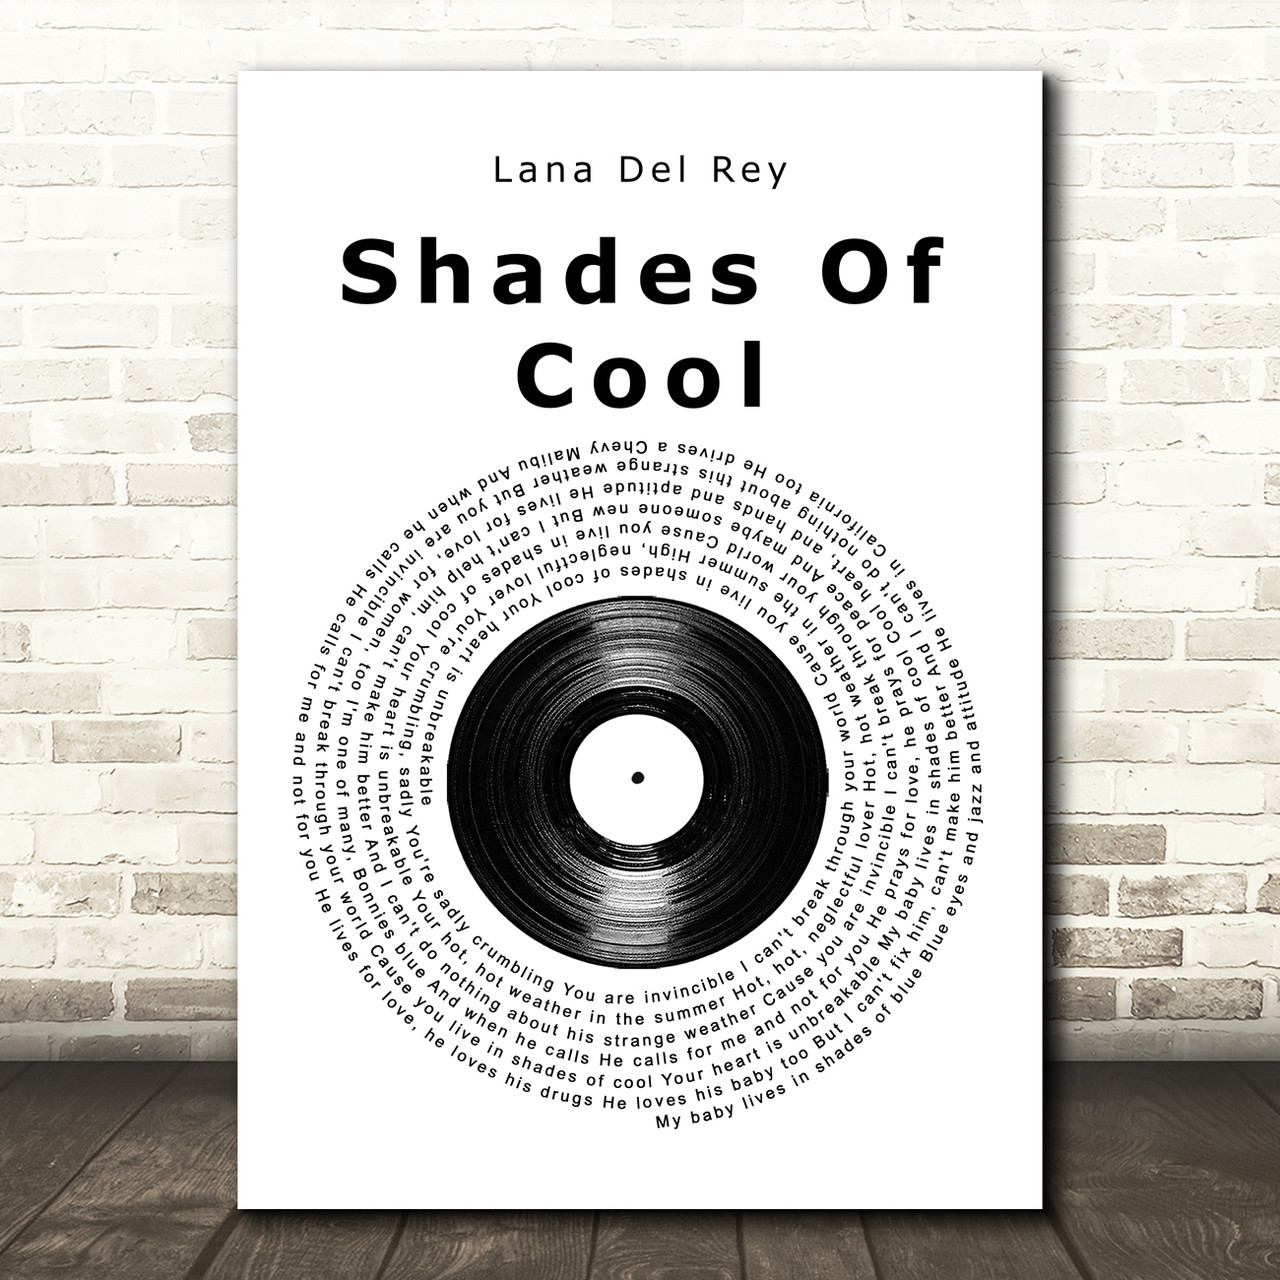 Lana Del Rey - Shades of Cool Lyrics